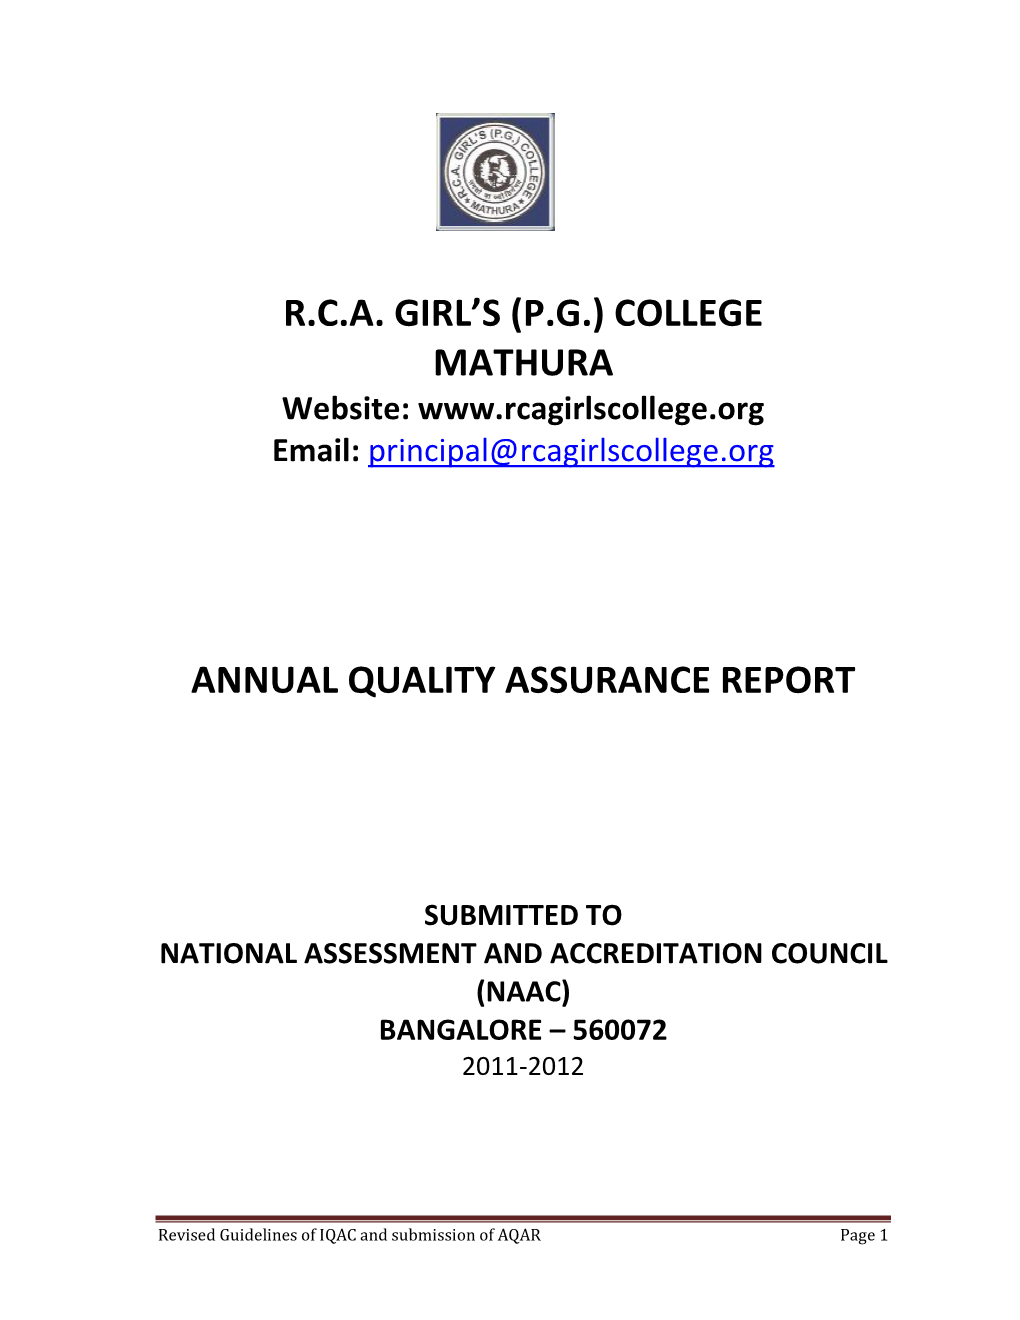 AQAR 2011-2012 Report